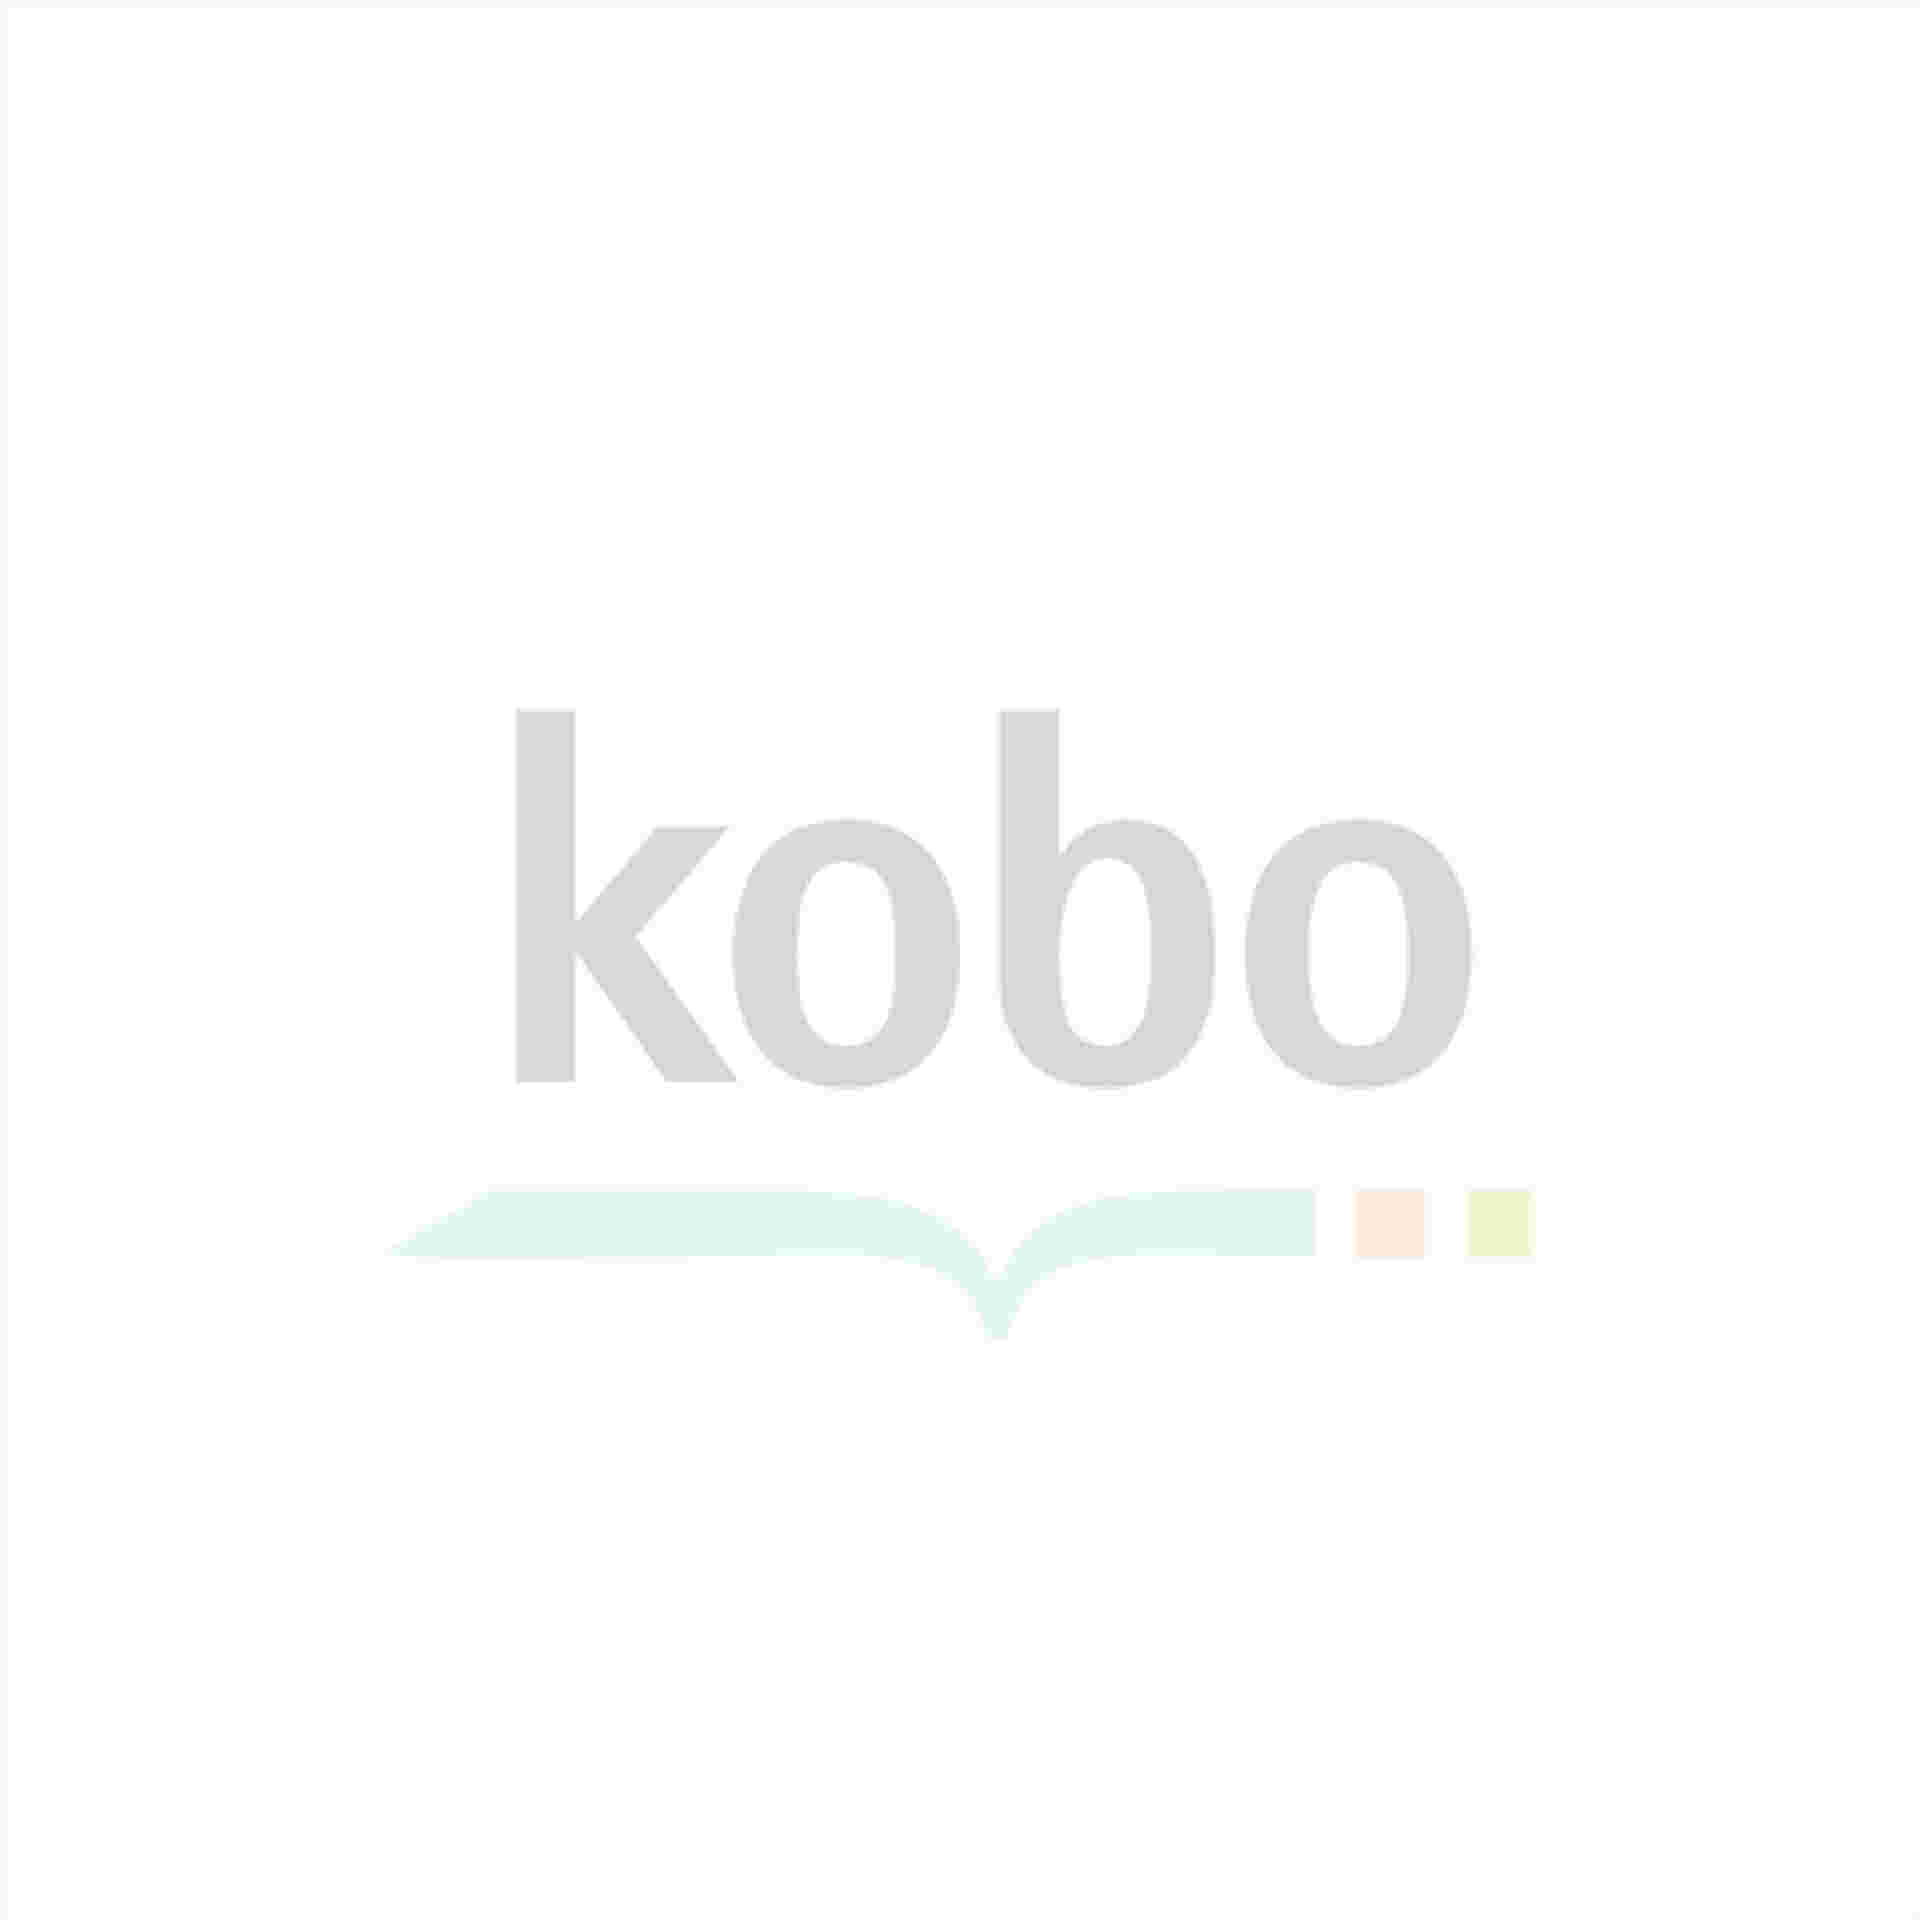 Kobo - feature_kobo_namingidentity_logoconcept6_3col